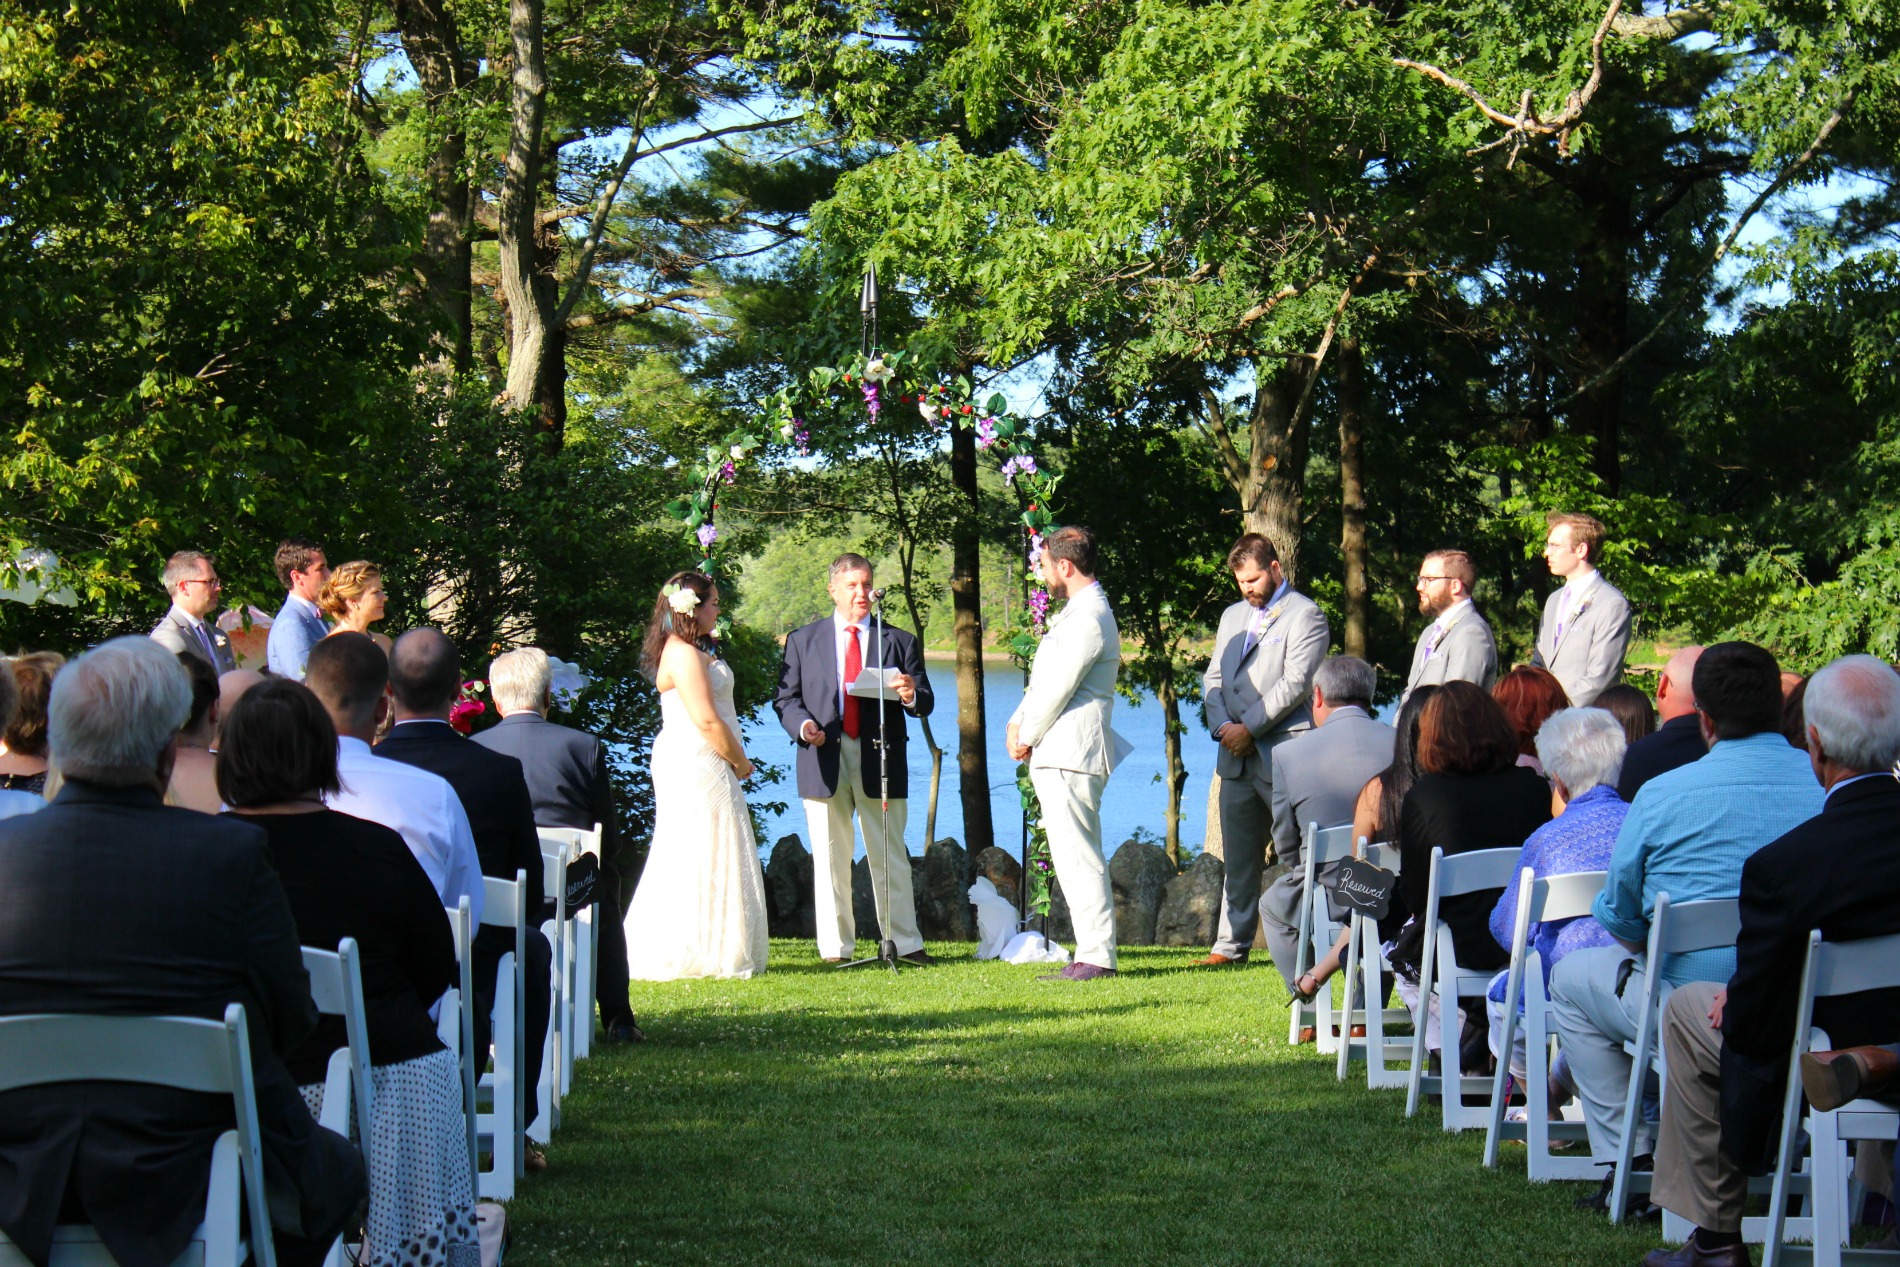 The 10 Best Wedding Venues in Short Hills, NJ - WeddingWire